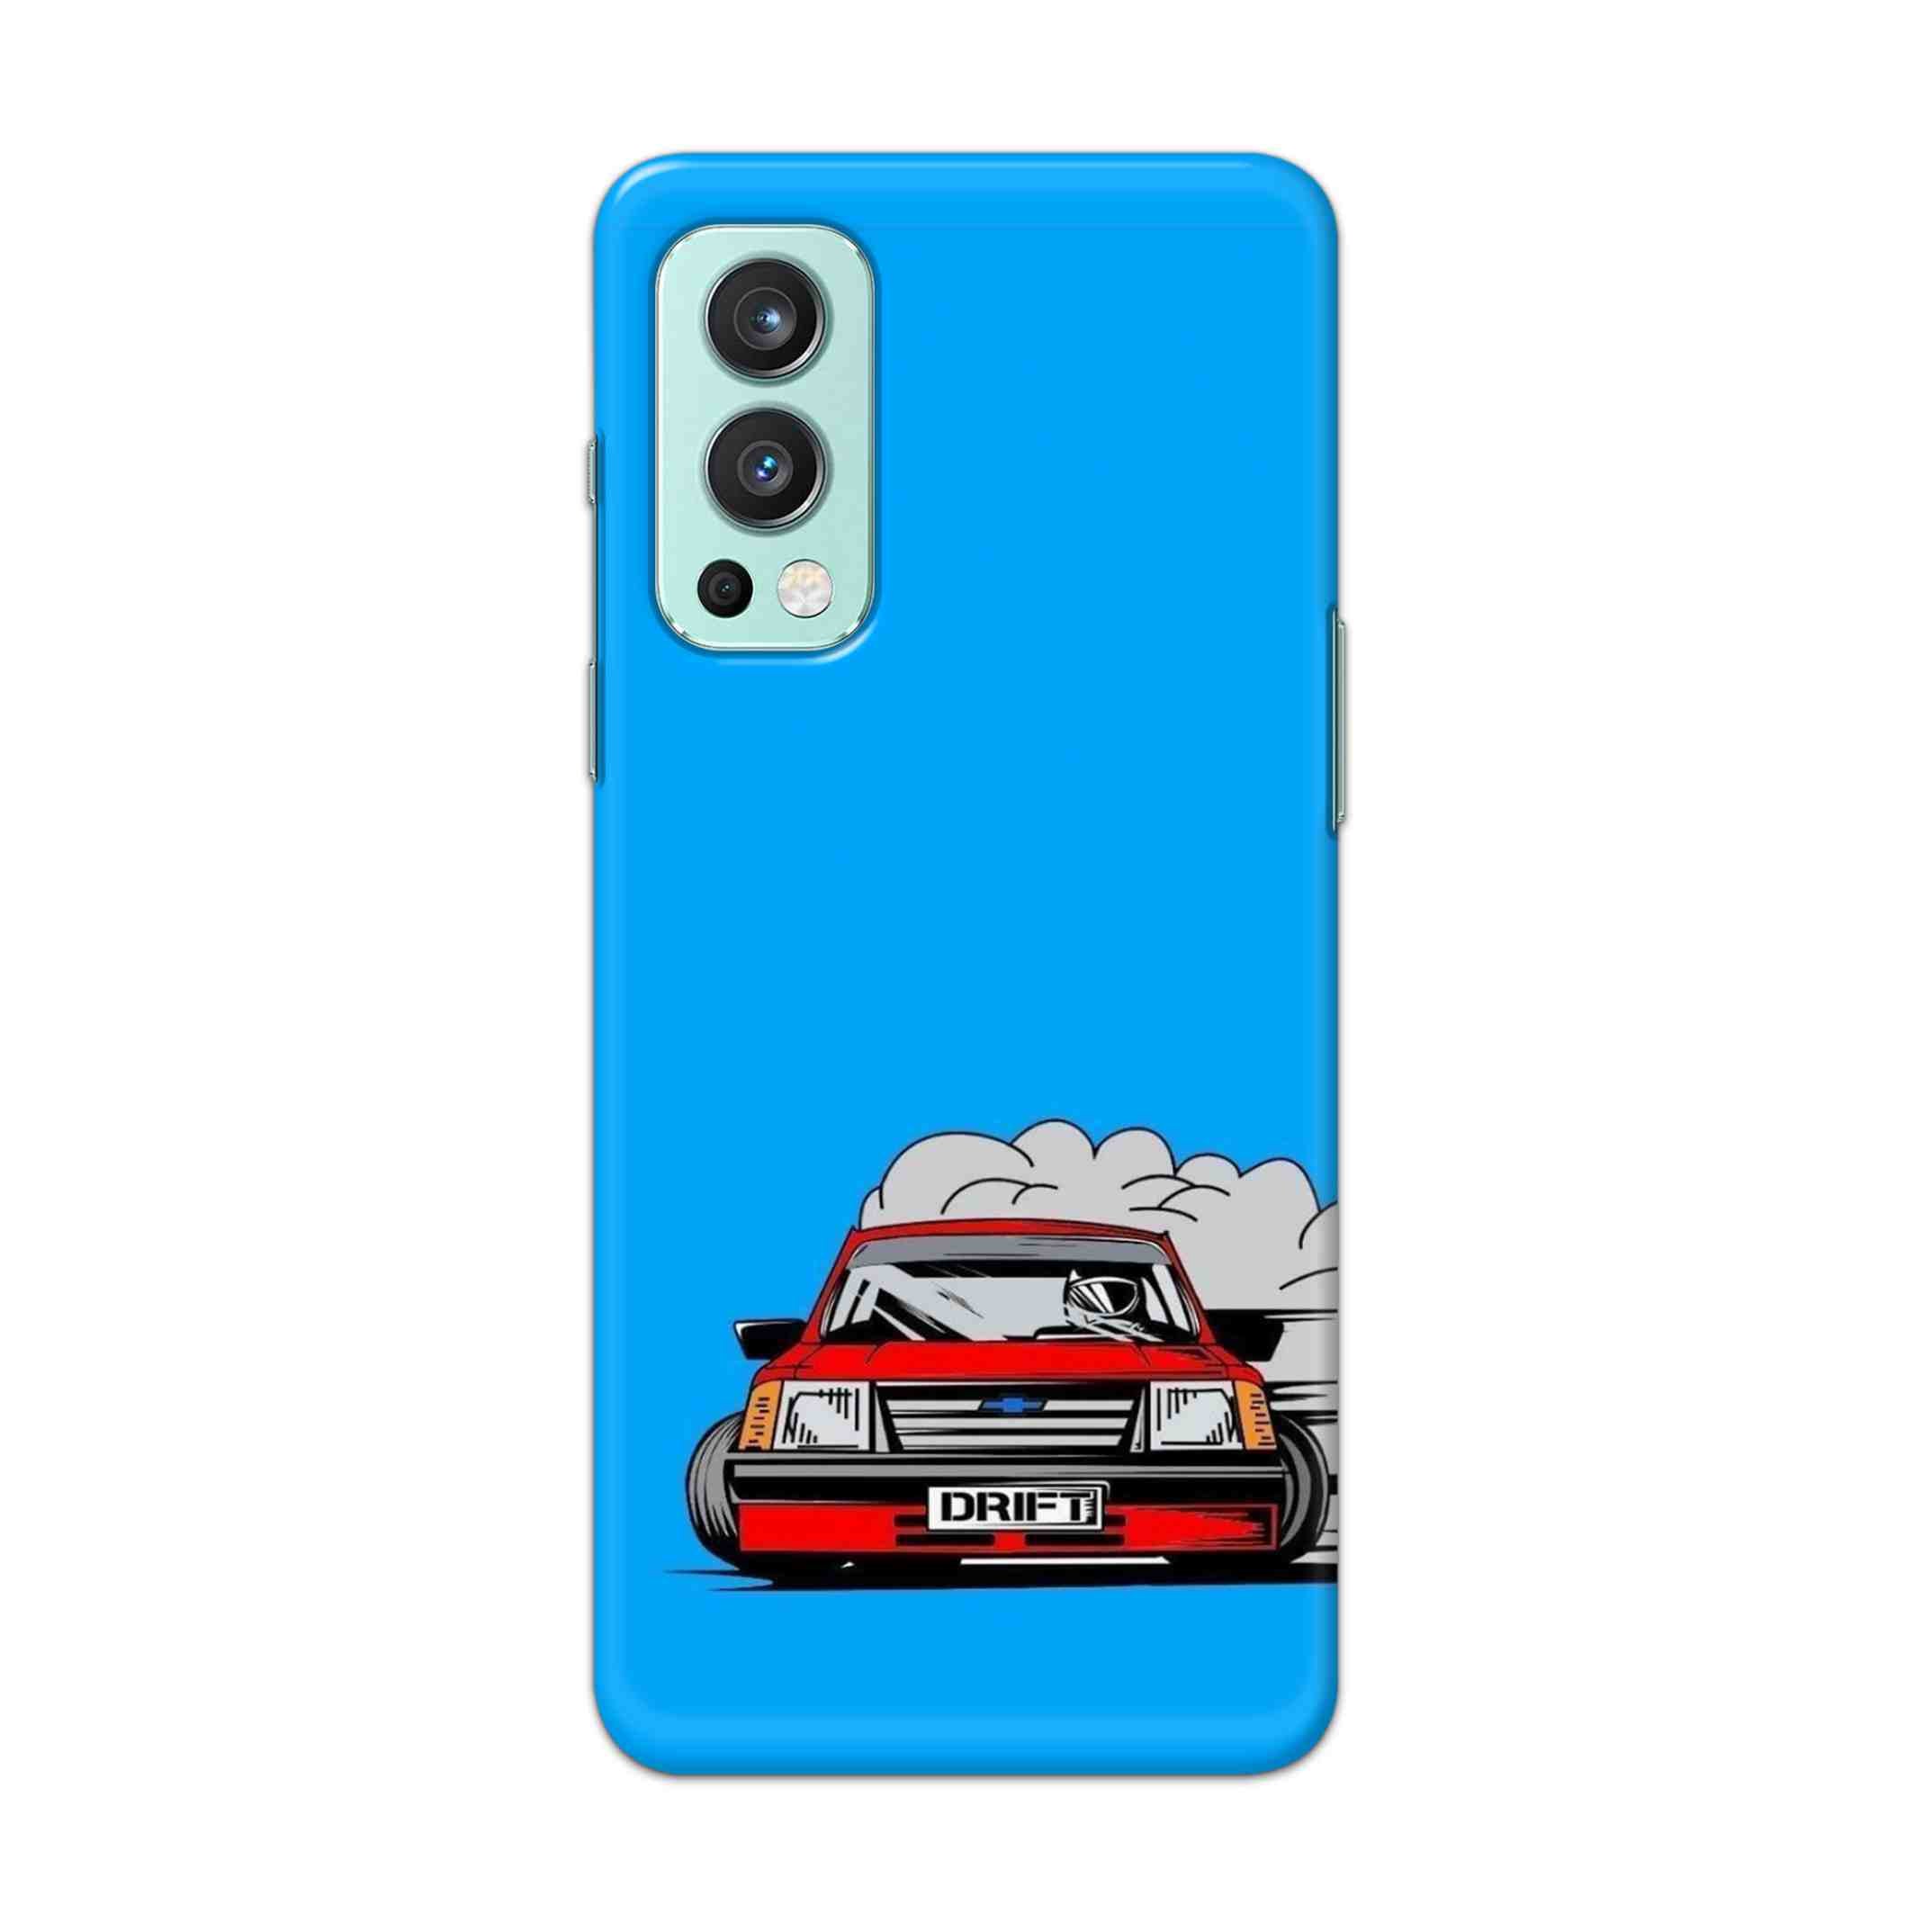 Buy Drift Hard Back Mobile Phone Case Cover For OnePlus Nord 2 5G Online